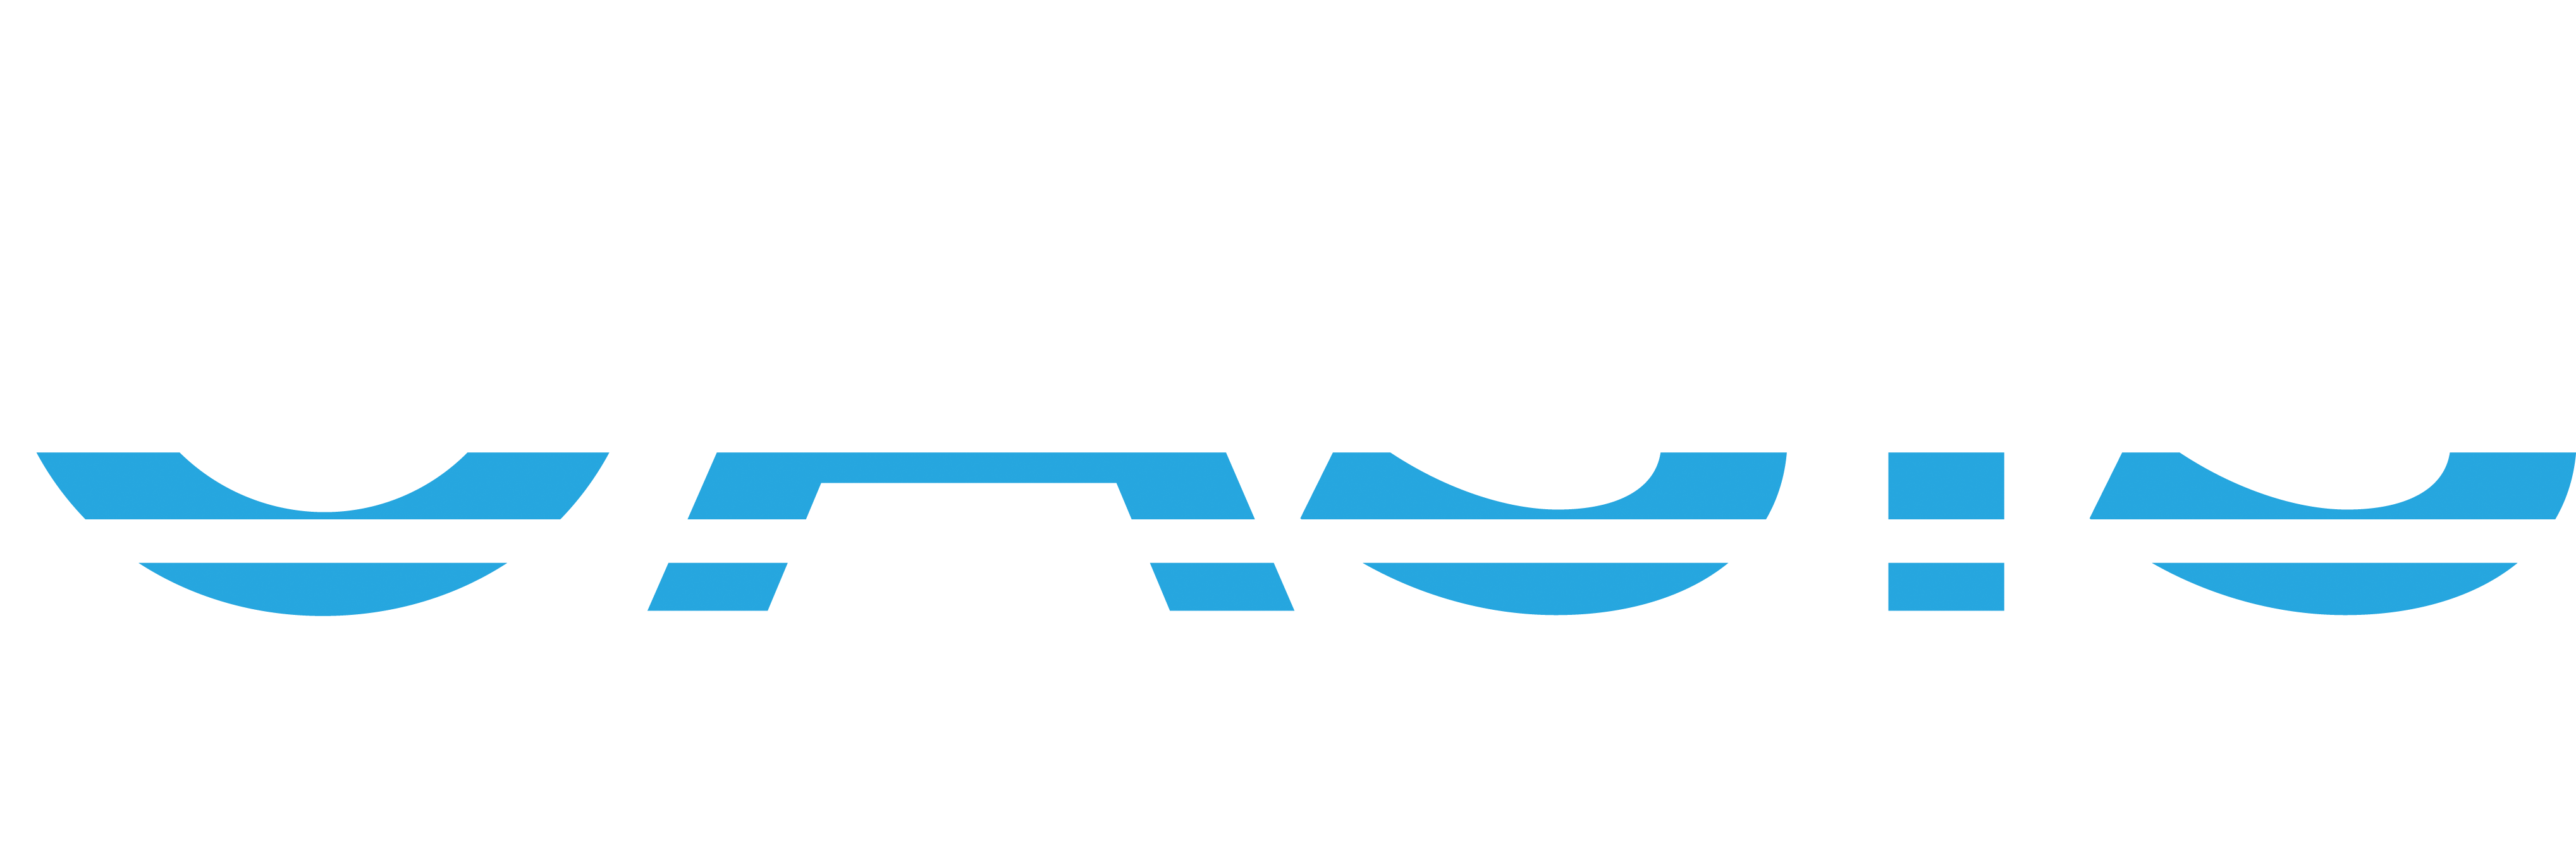 Oasis Church Logo PNG